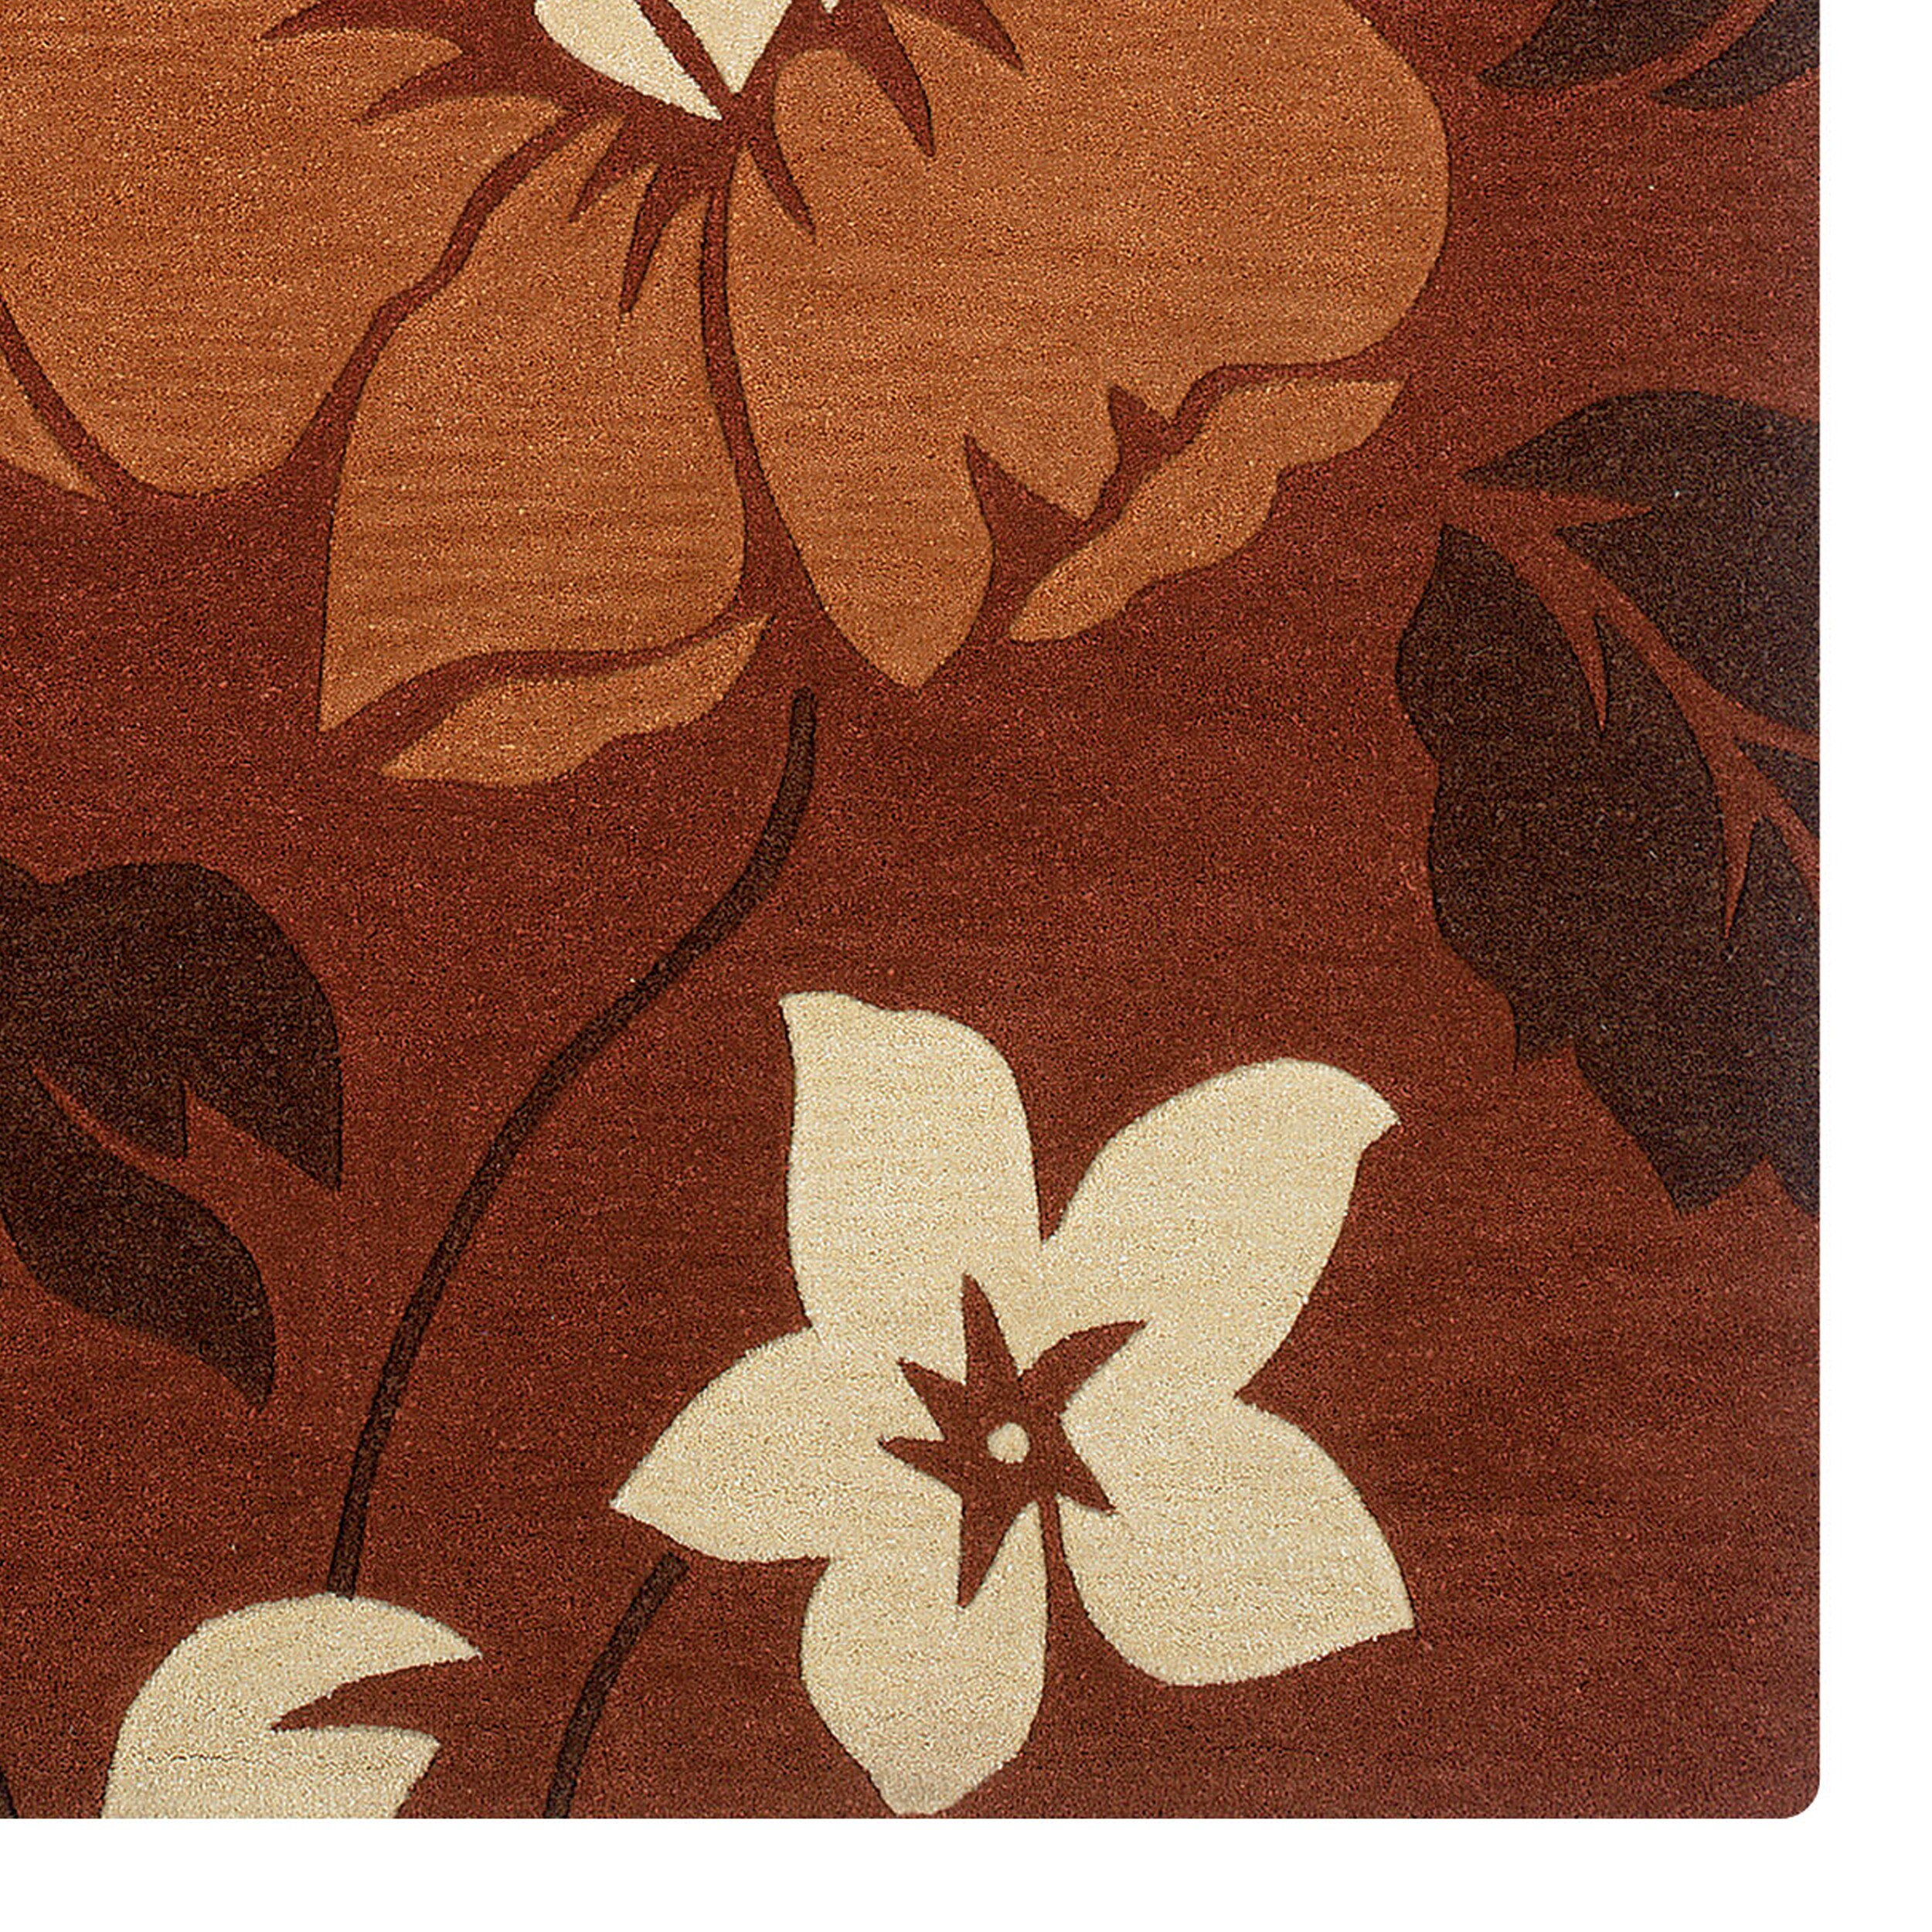 Neutral Trio Rectangular Handmade Floor Mat: Brown, White, and